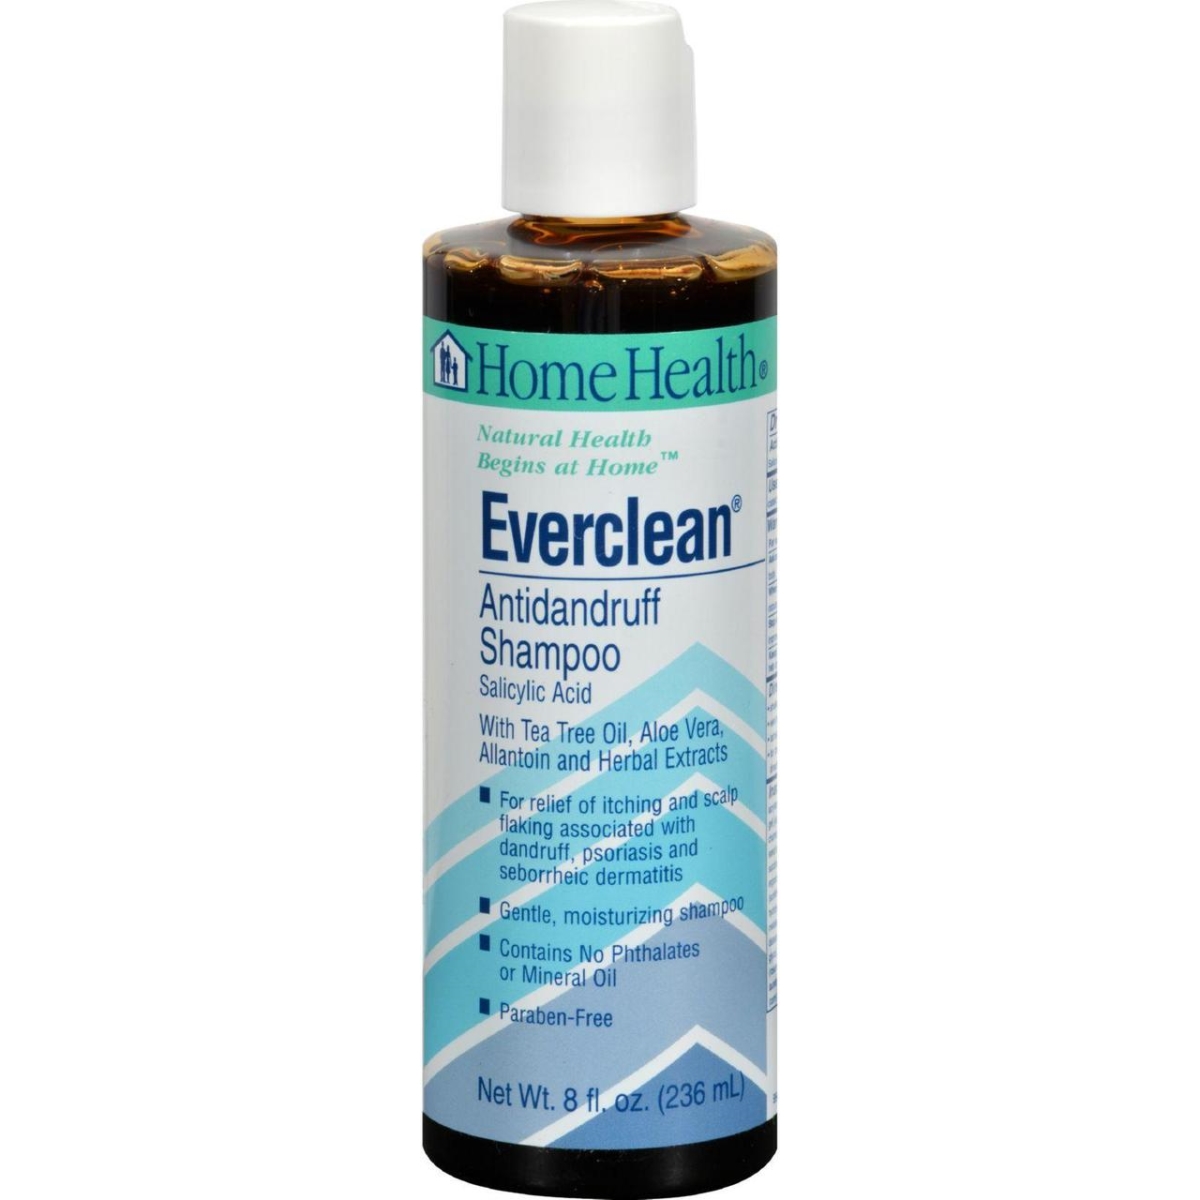 Hg0956904 8 Fl Oz Everclean Antidandruff Shampoo